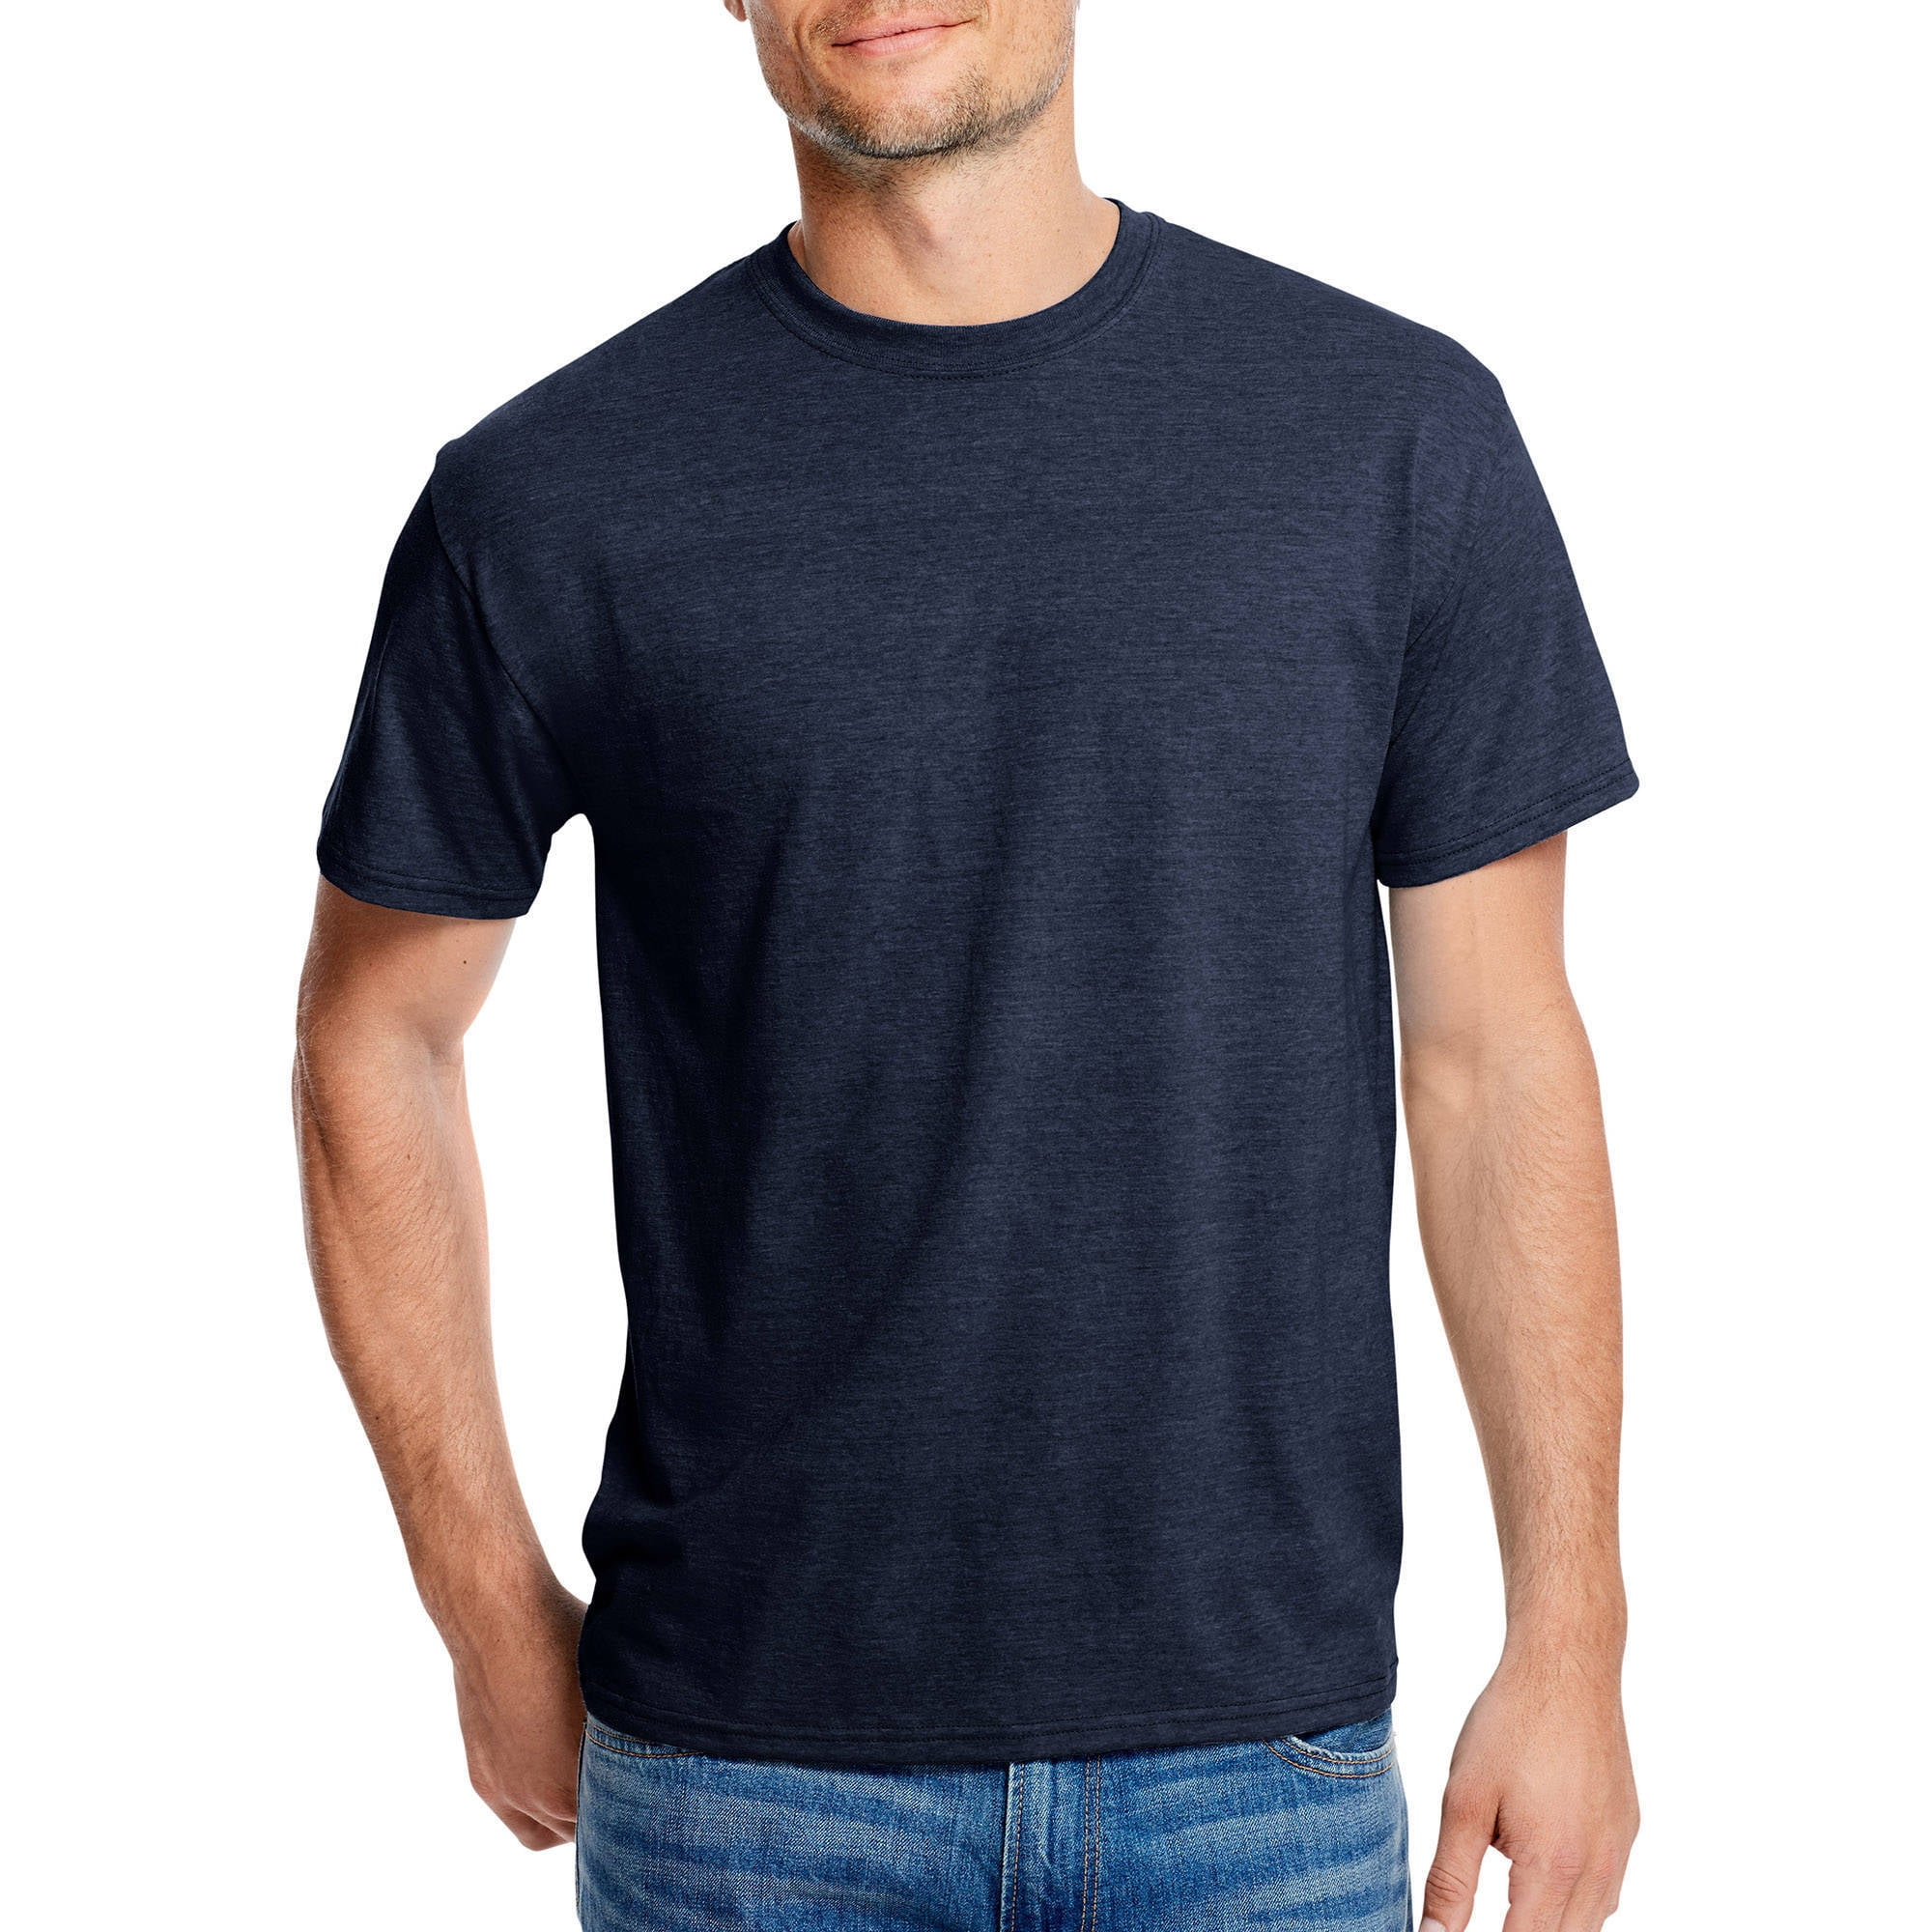 Brand New Stone Sour men's size extra large XL t-shirt black short sleeve Hanes